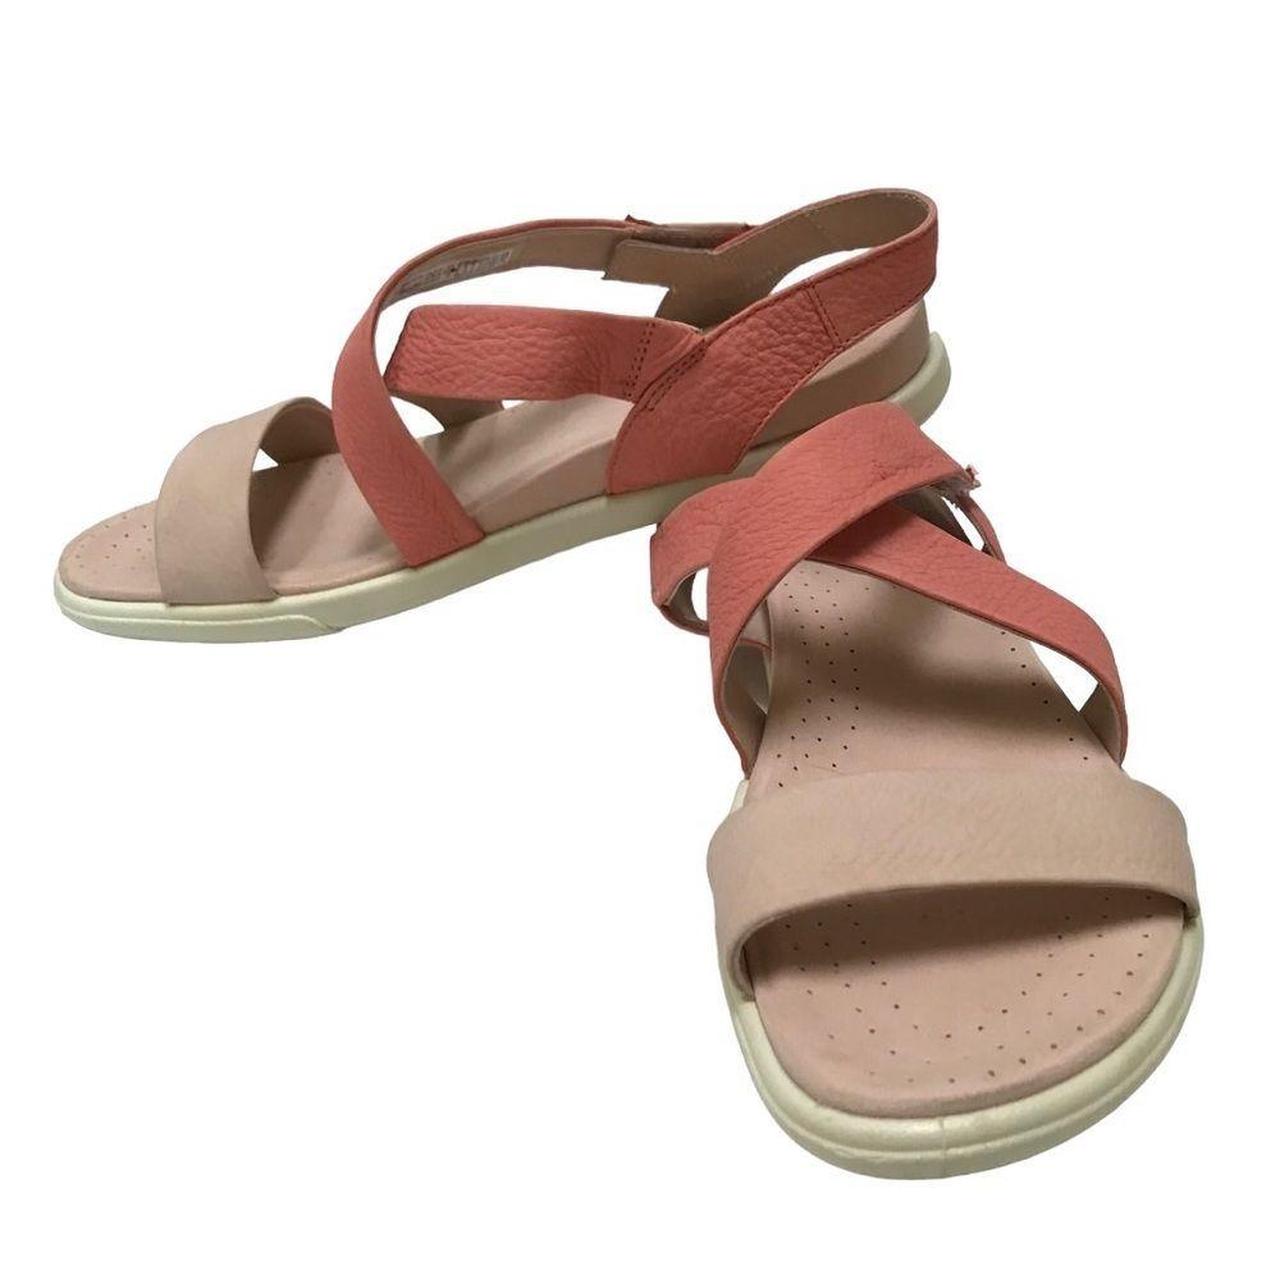 makeup regnskyl Stavning Ecco Damara crisscross pink leather sandals Size... - Depop